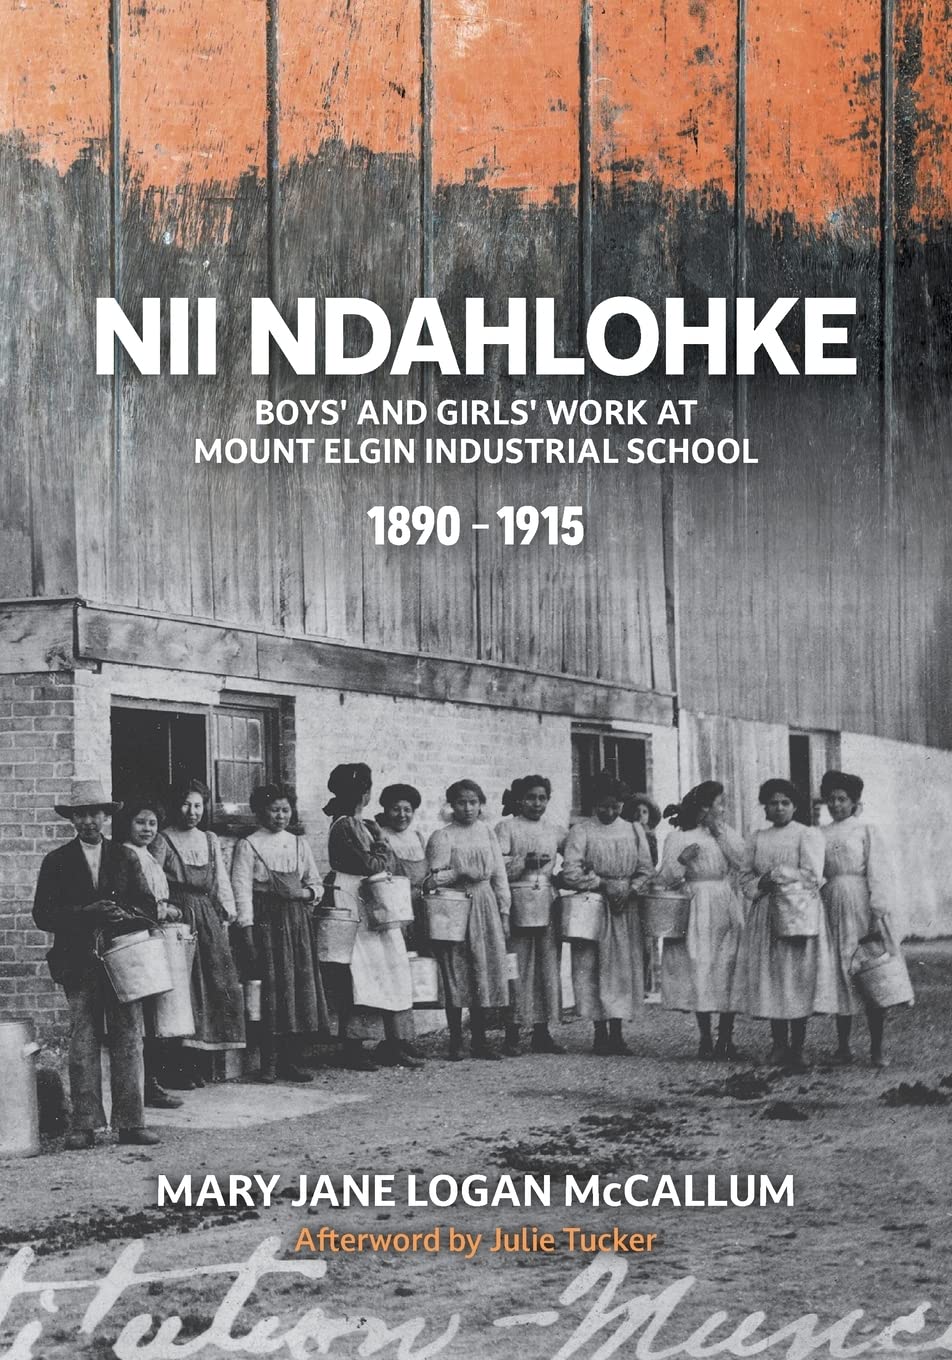 Nii Ndahlohke: Boys' and Girls' Work at Mount Elgin Industrial School, 1890-1915 [Mary Jane Logan McCallum]